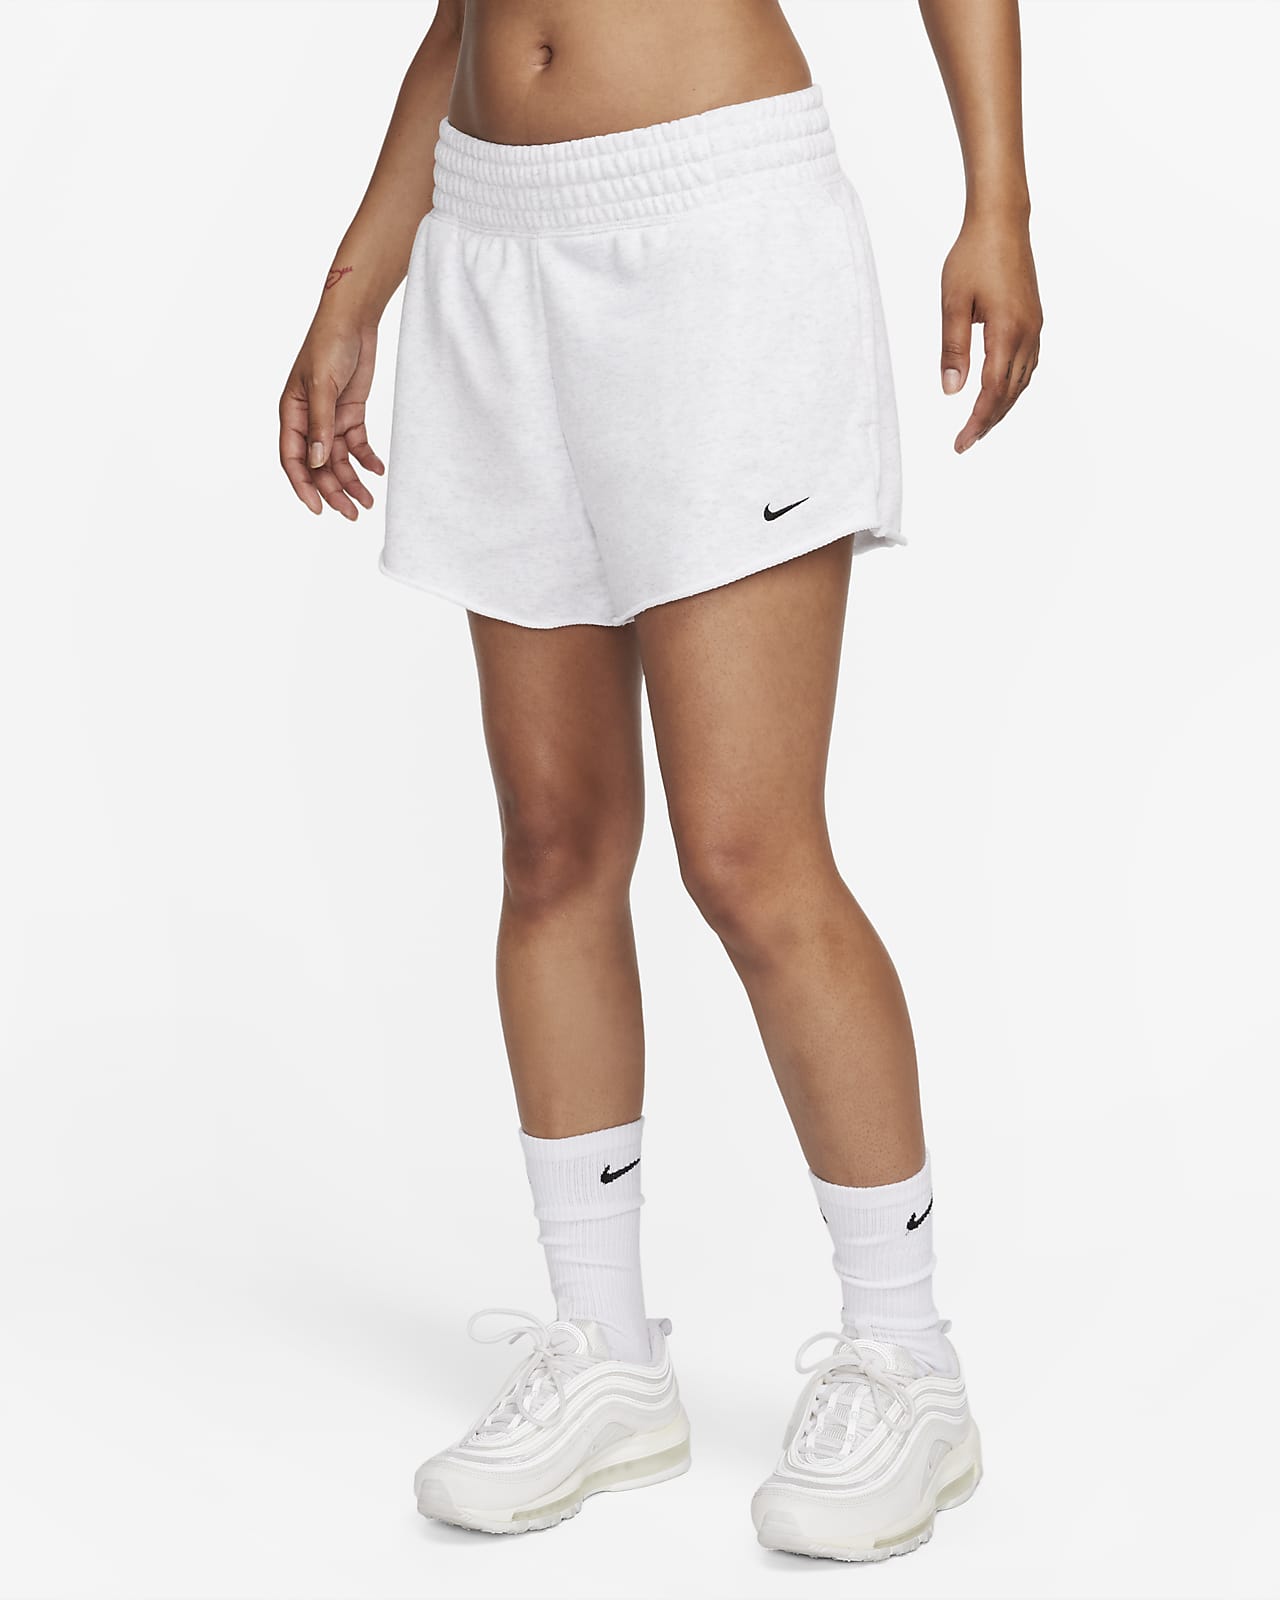 Nike Sportswear Women's High-Waisted French Terry Shorts.